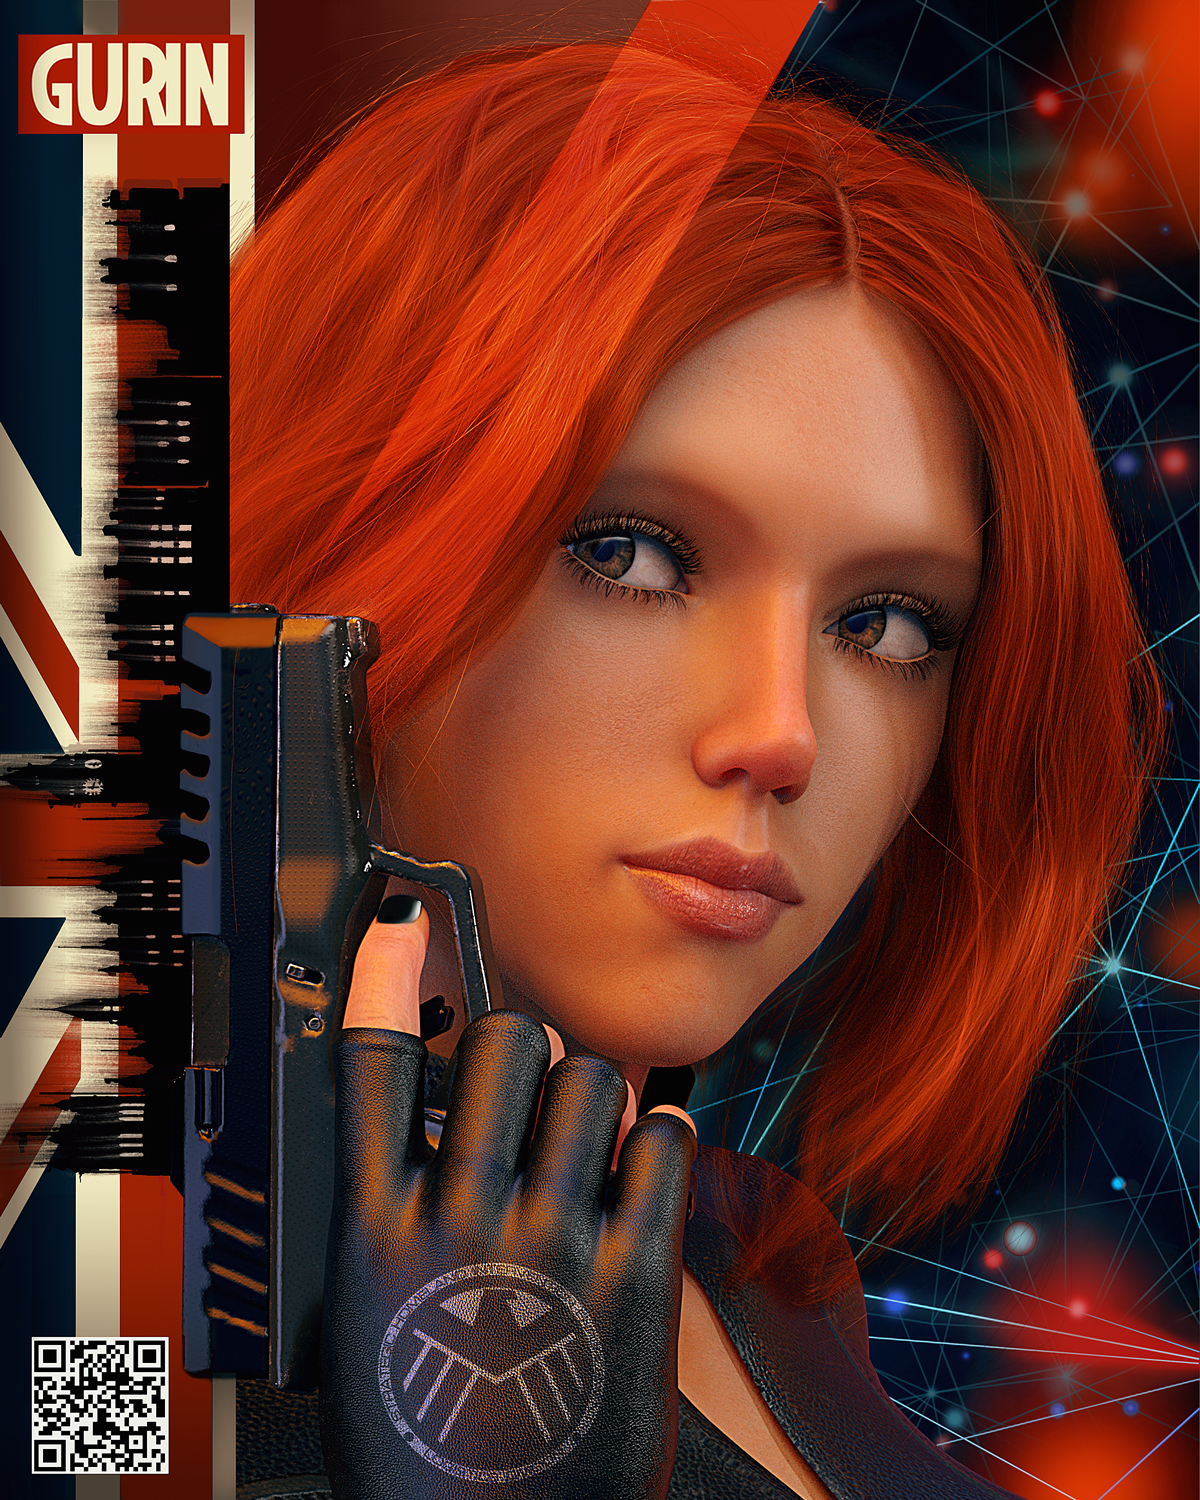 Black Widow Poster Avengers Endgame Redhead Gurin Digital Gun Glock Weapon ARTWORK Looking Away Comi 1200x1500